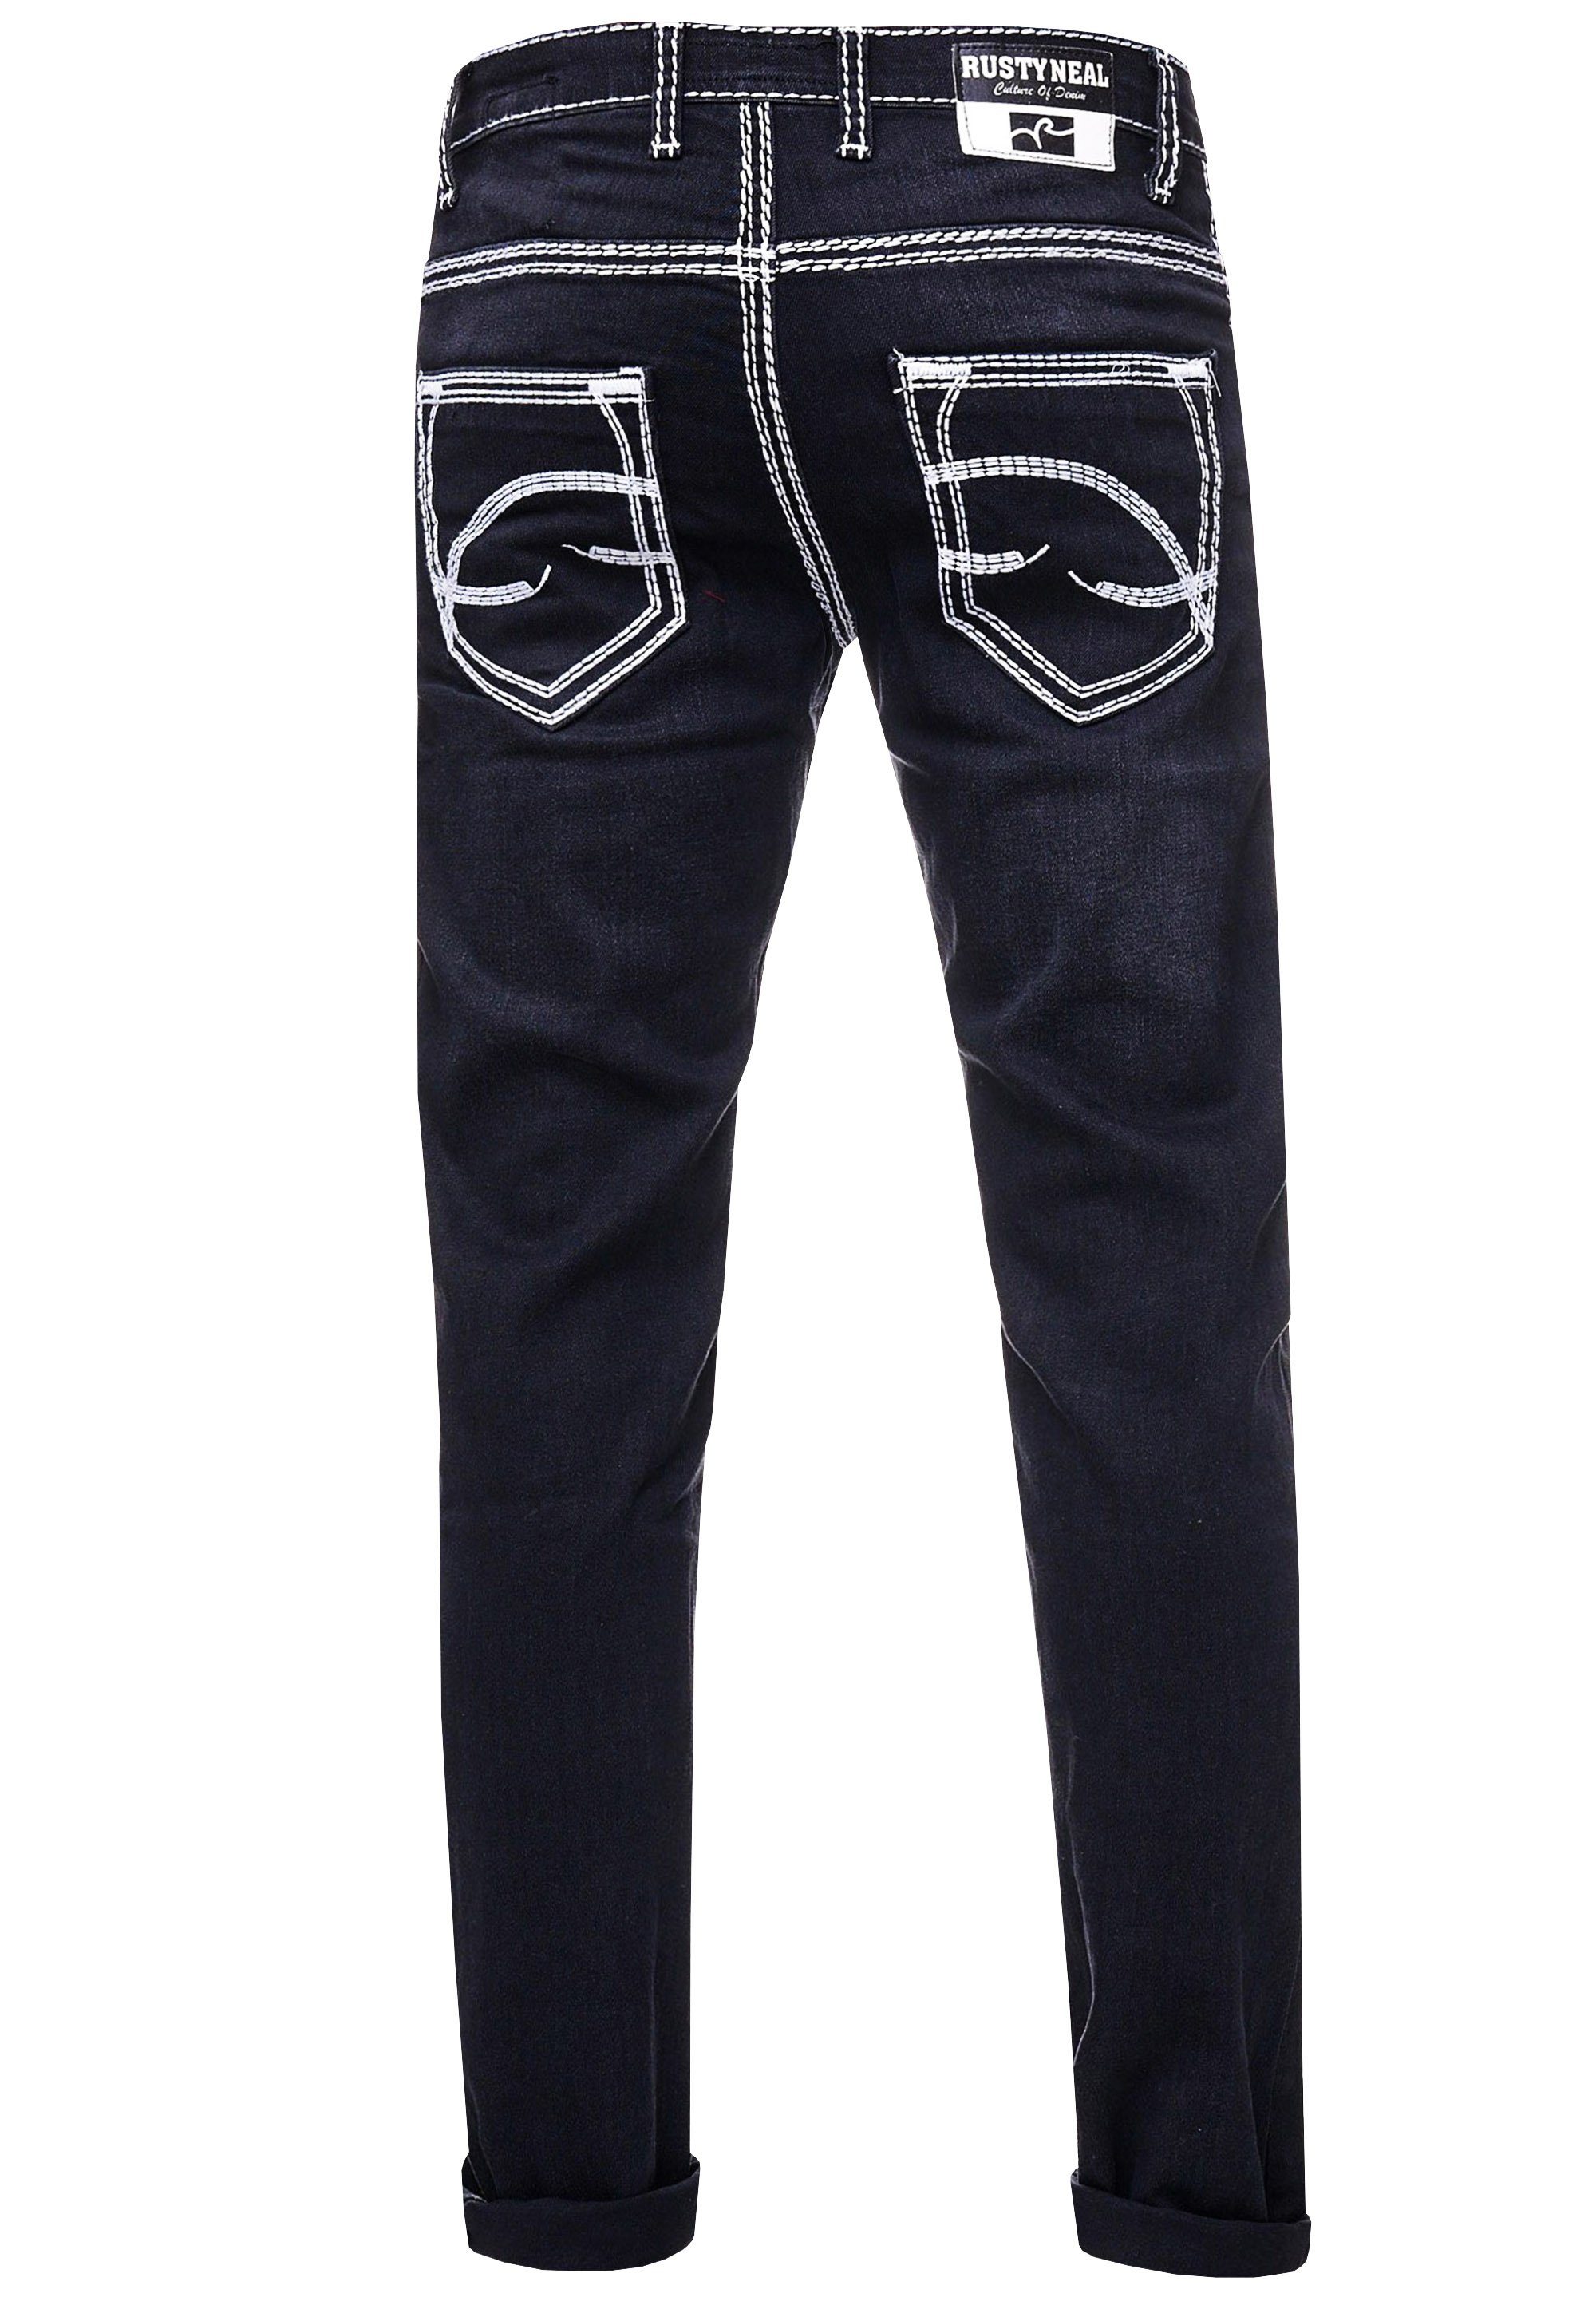 Rusty 7 Kontrastnähten Neal LEVIN mit trendigen Straight-Jeans